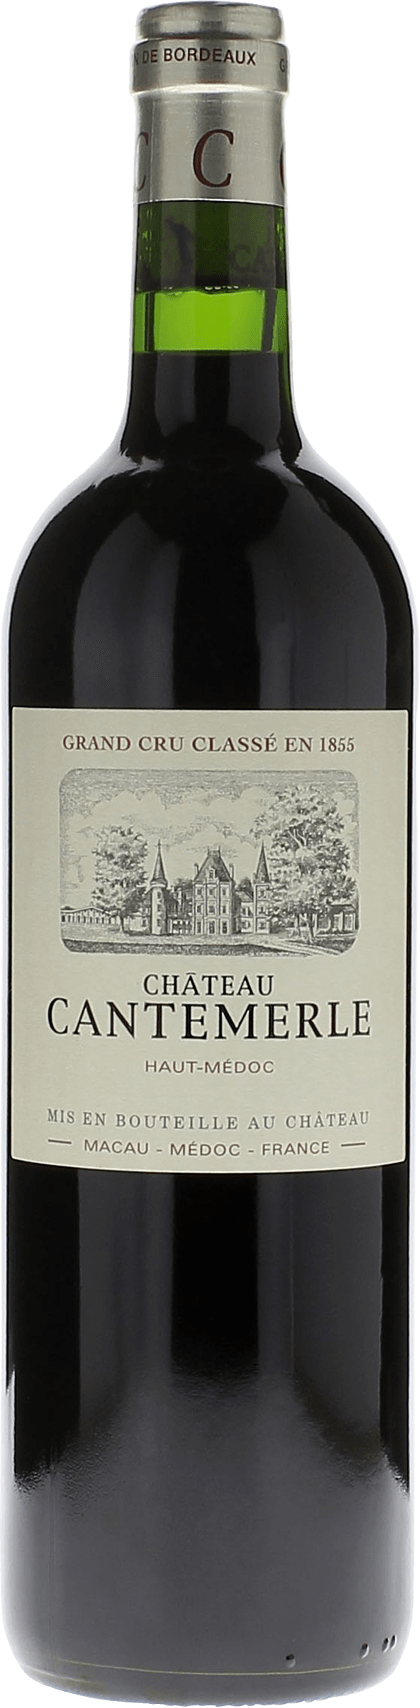 Cantemerle 2013 5me Grand cru class Mdoc, Bordeaux rouge